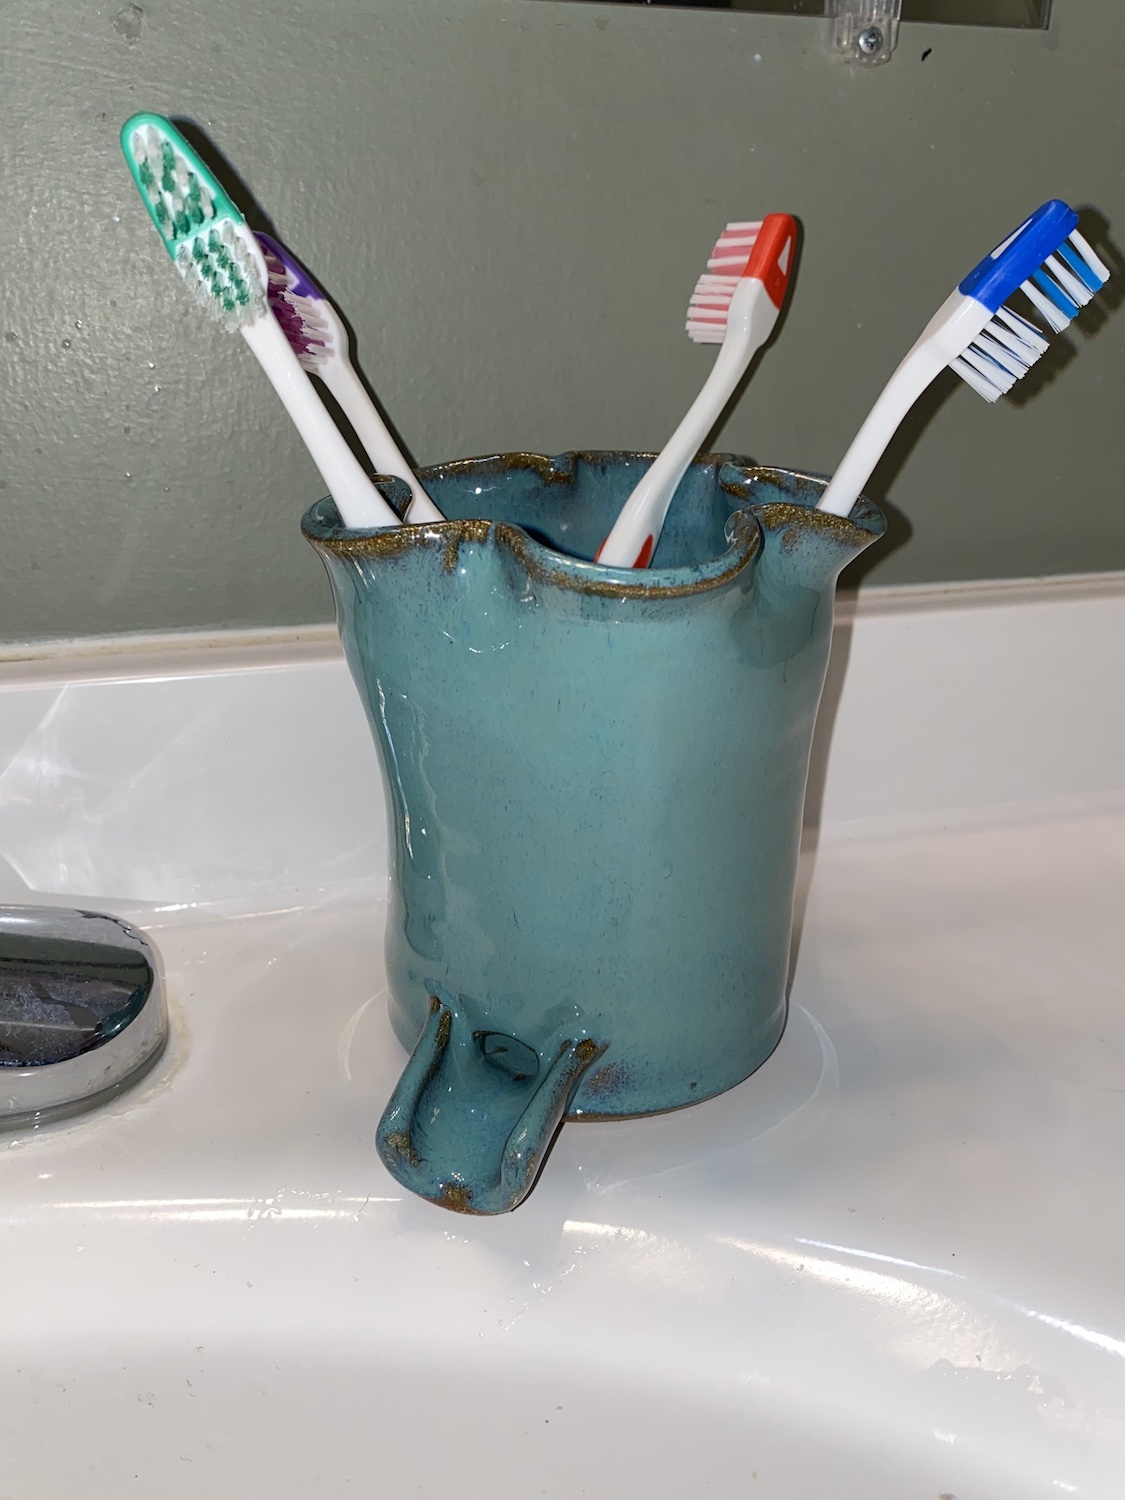 https://businesstalksistergawk.com/wp-content/uploads/2021/04/Small-Teal-Toothbrush-holder.jpeg